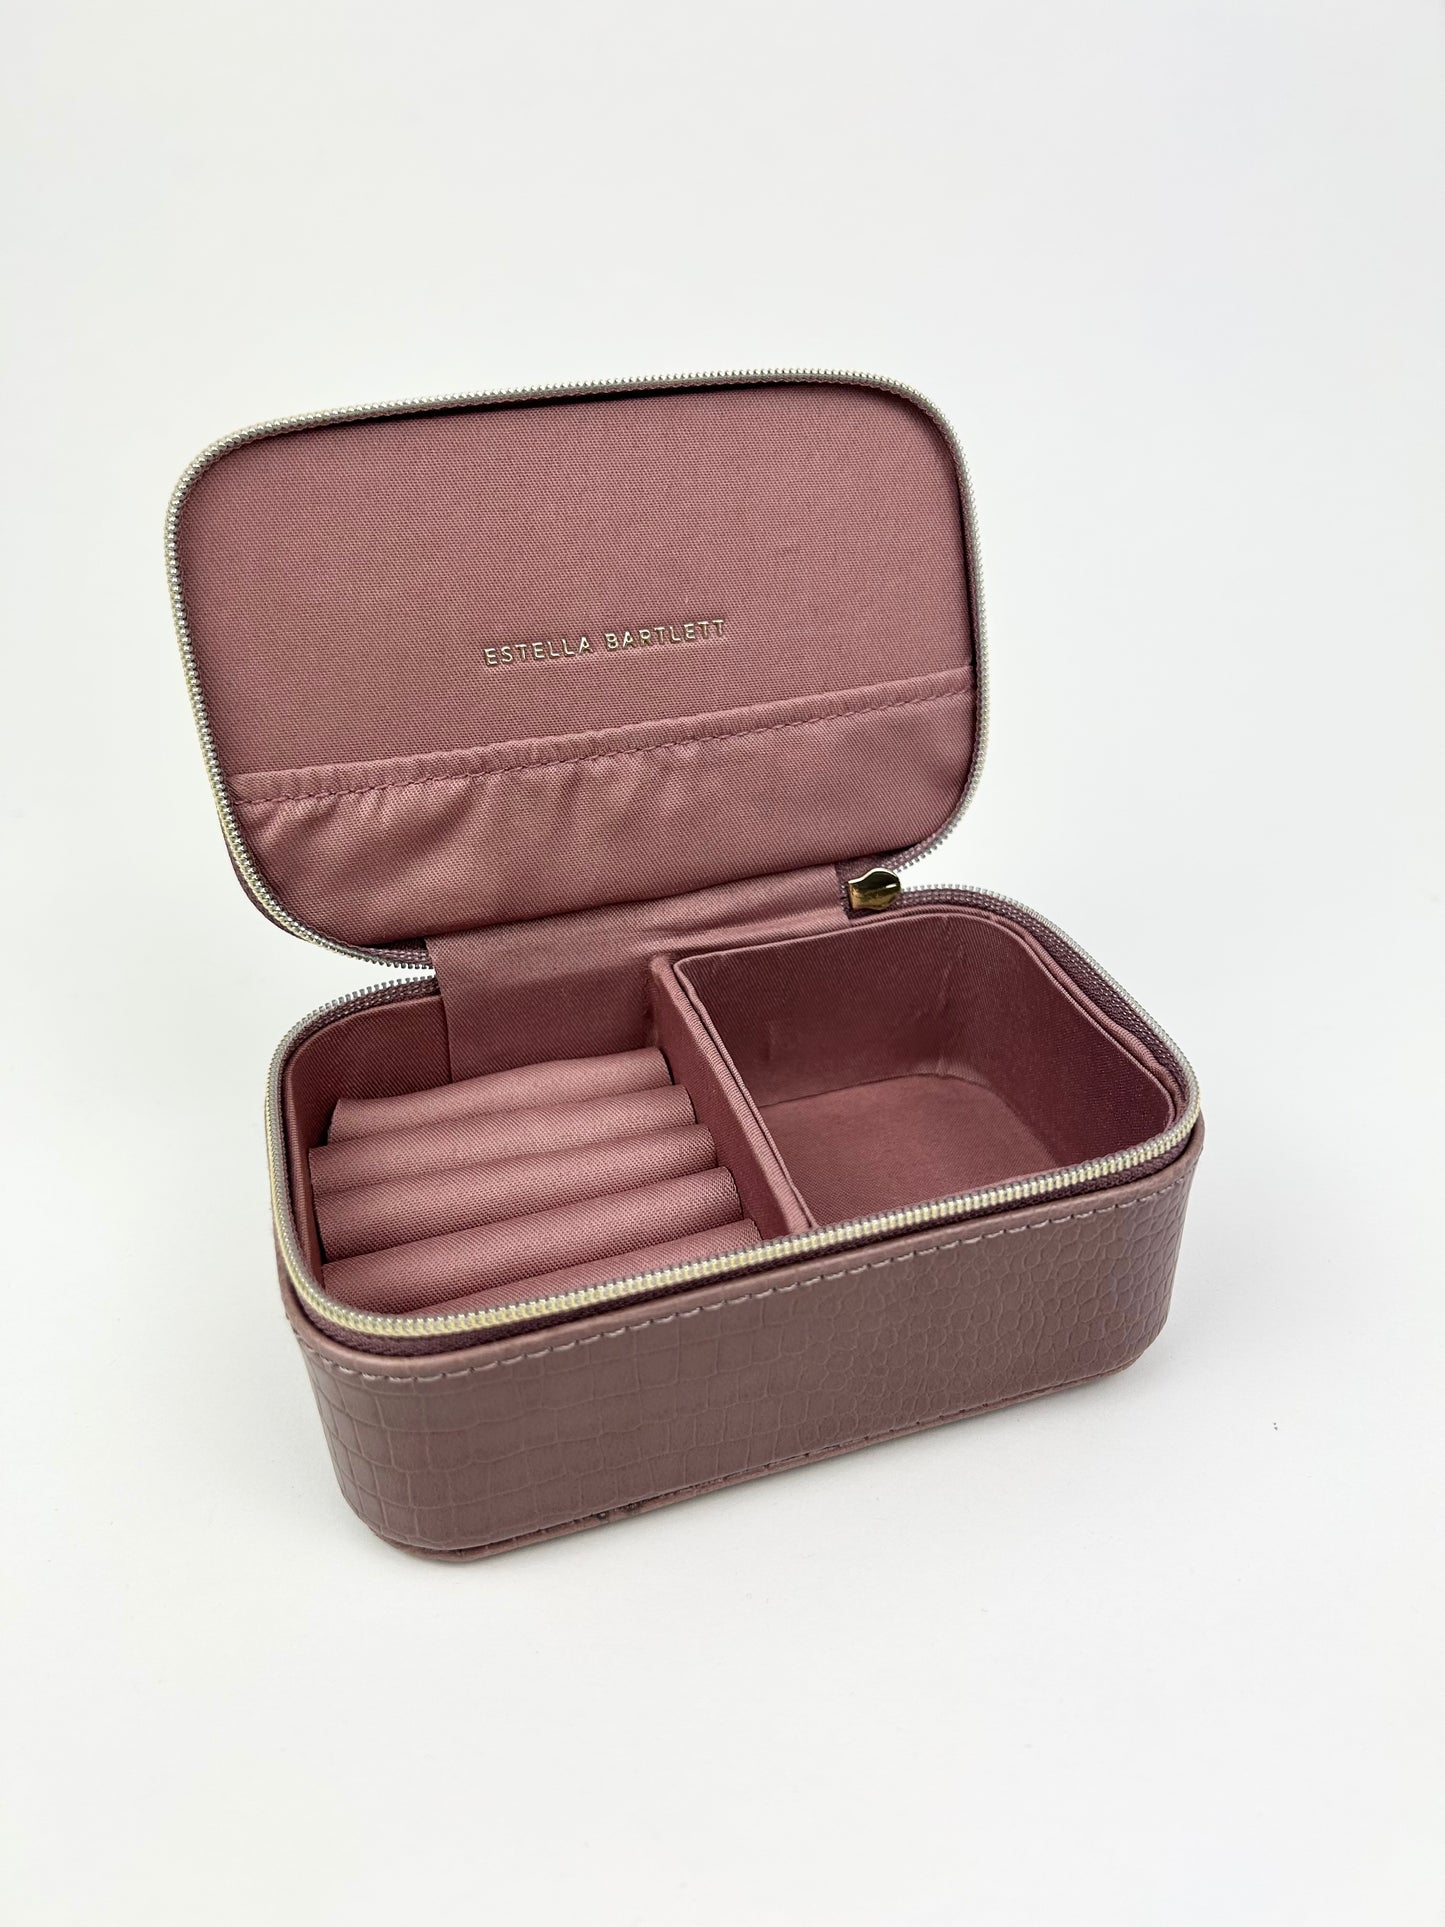 Estella Bartlett Pink Croc Mini Jewelry Box Dusty Travel Accessories in  at Wrapsody